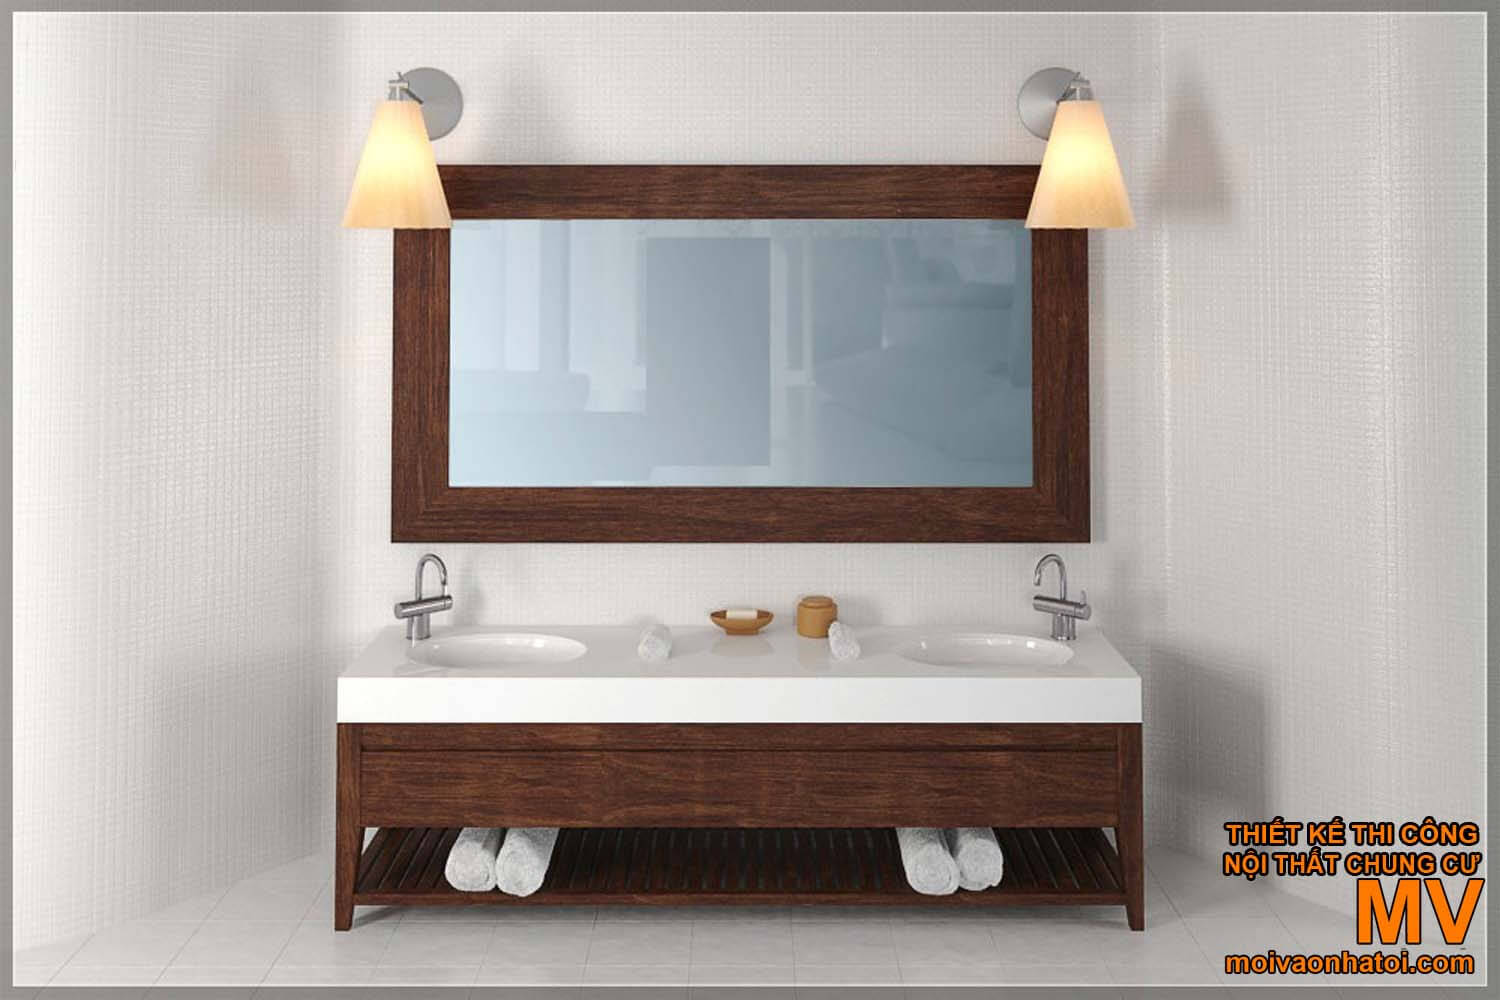 lavabo wash face, beautiful modern bathroom design